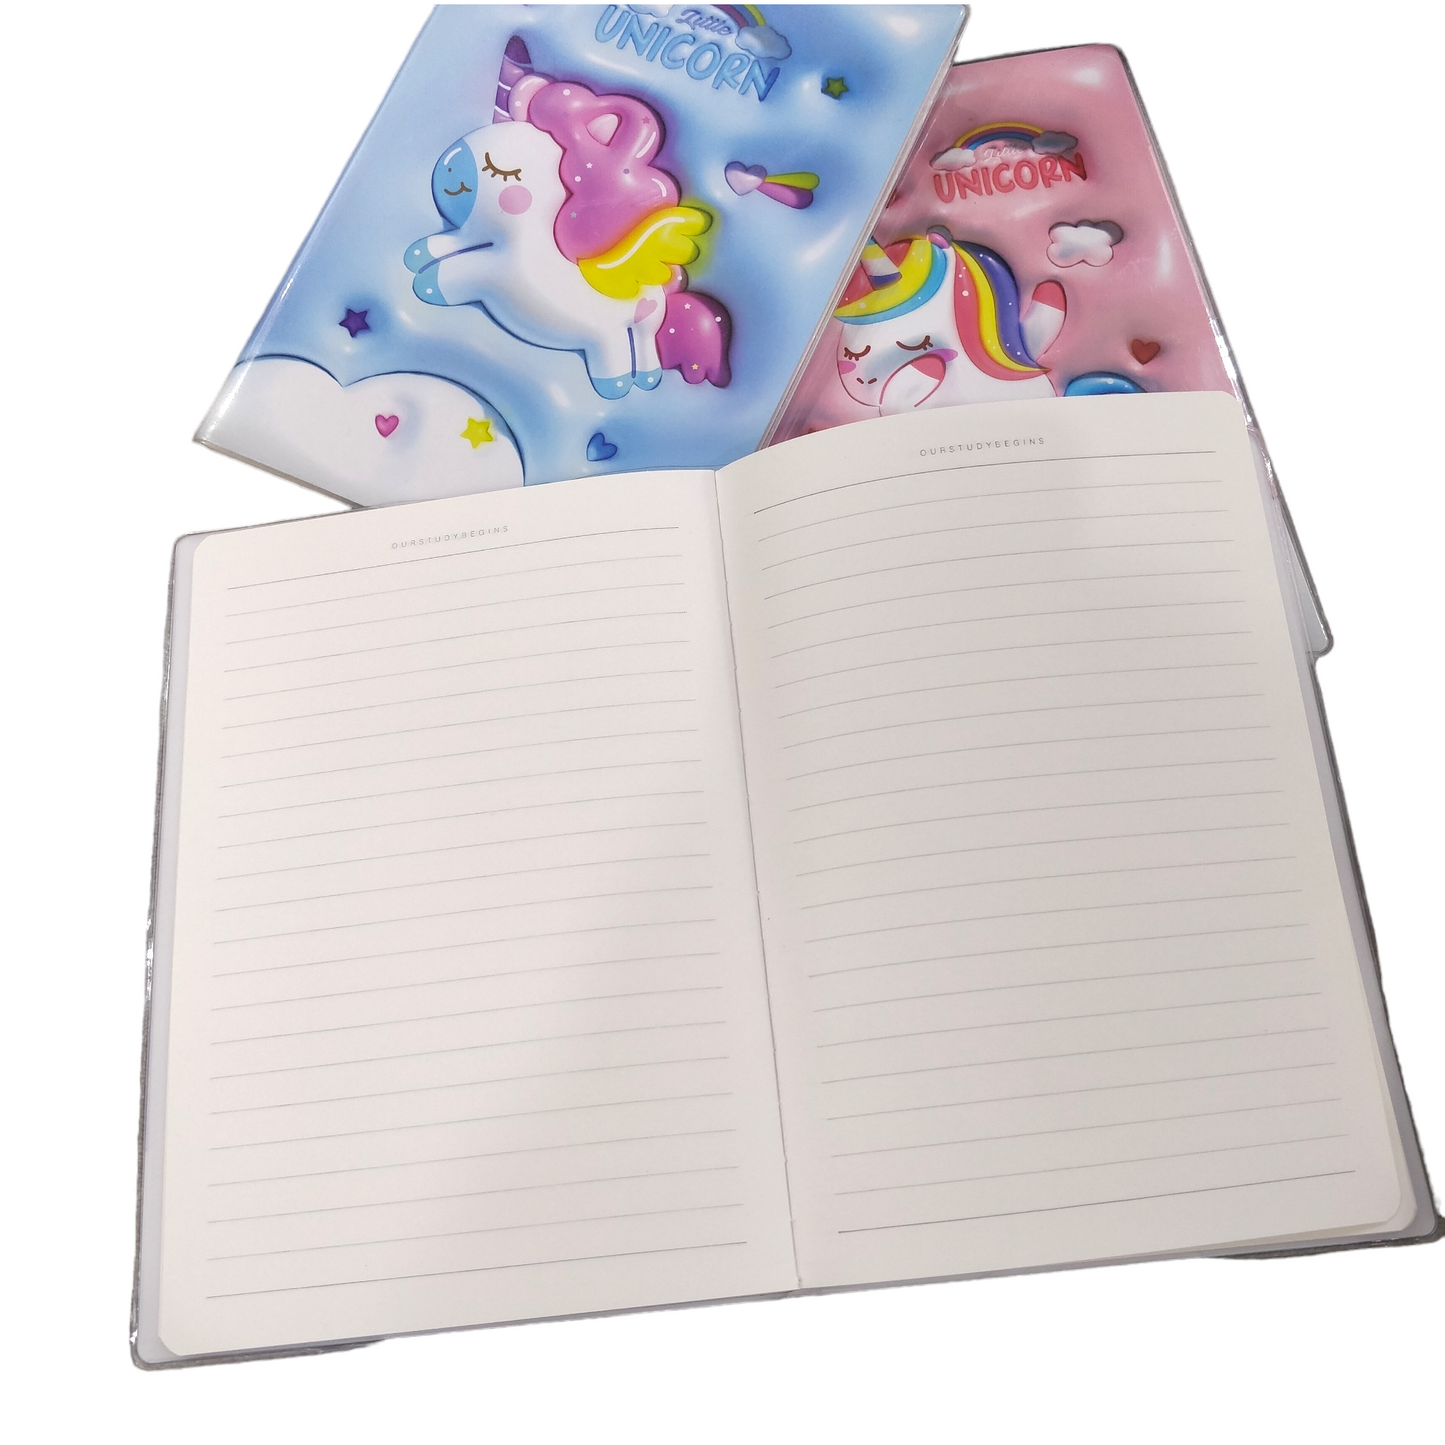 Big Size Unicorn 3D Notebook | Diary